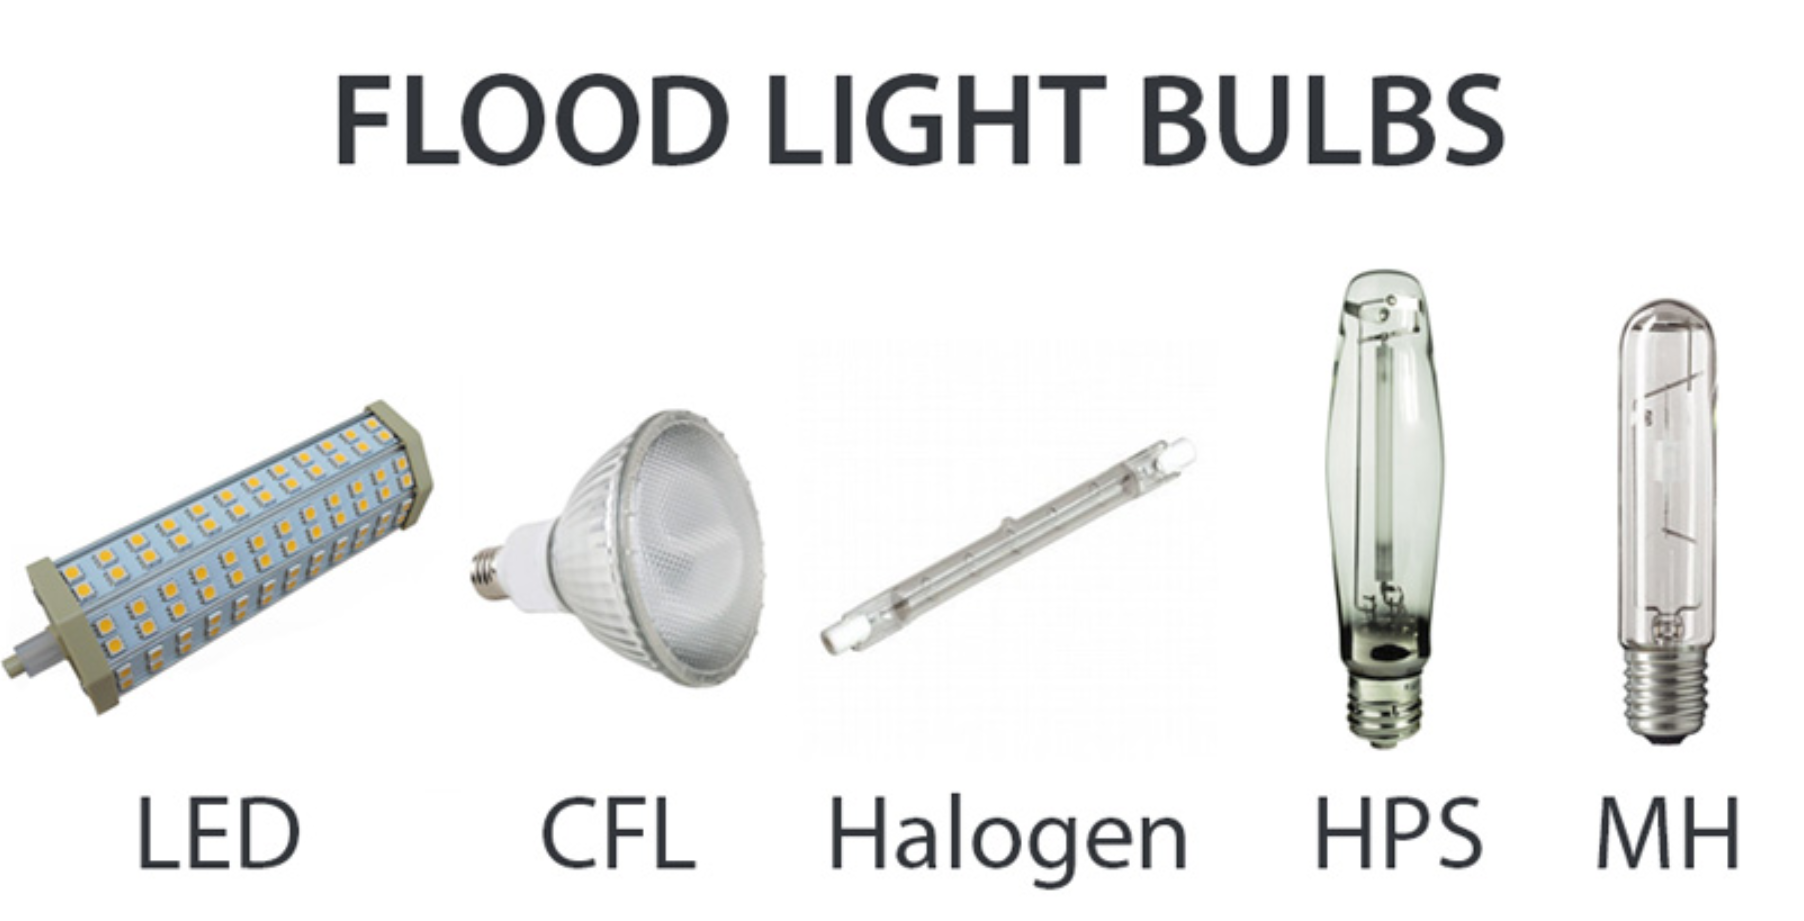 Types Of Floodlights Tachyon Light, Outdoor Flood Light Bulb Types